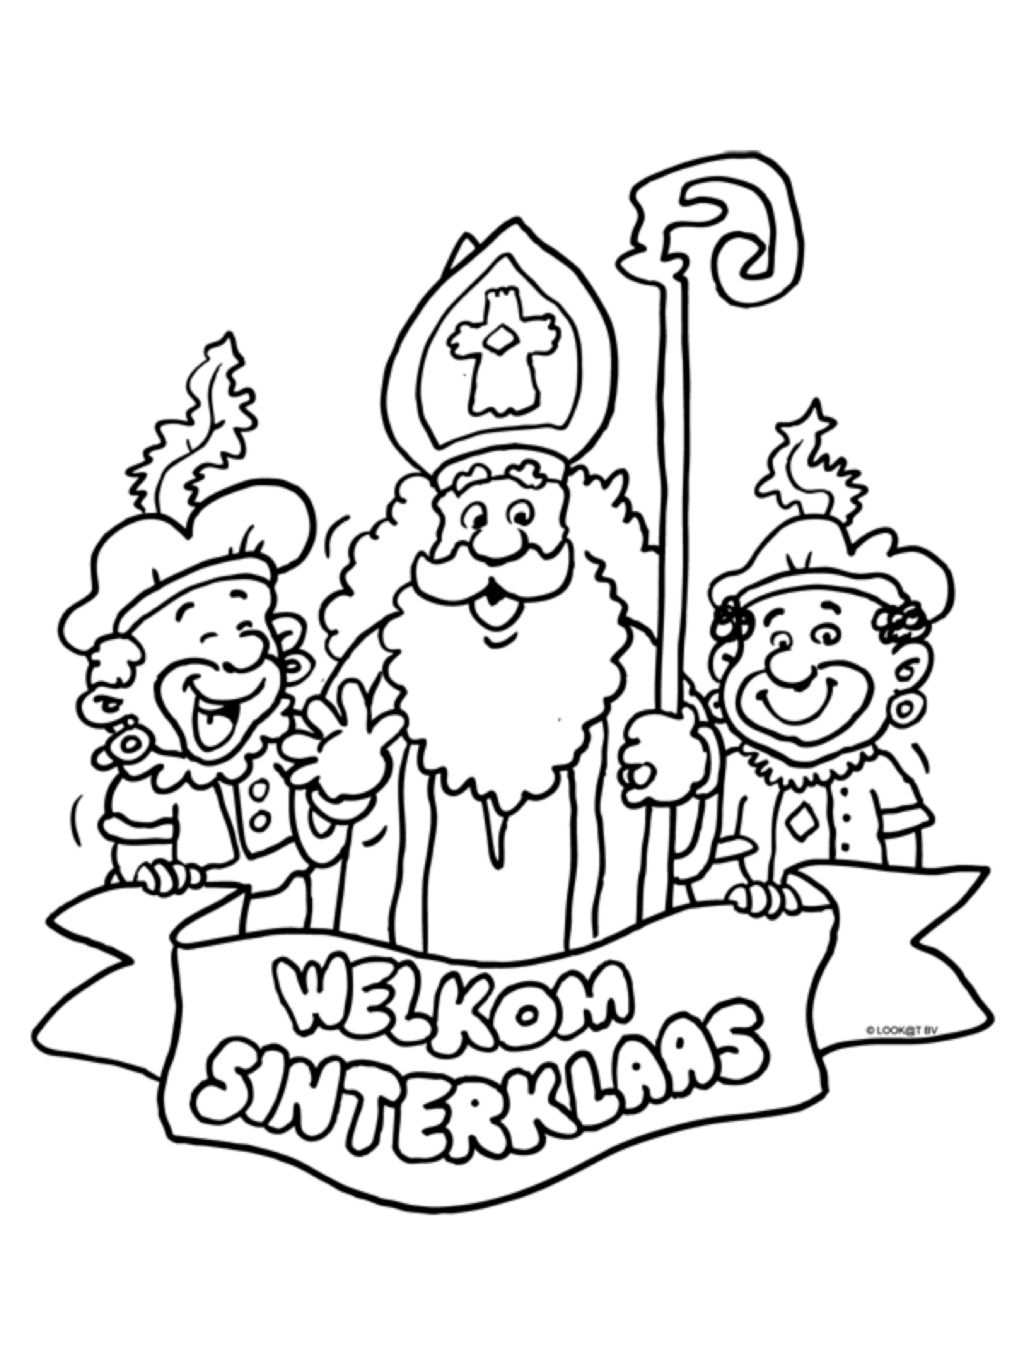 Kleurplaat Welkom Sinterklaas Sinterklaas Knutselen Sinterklaas